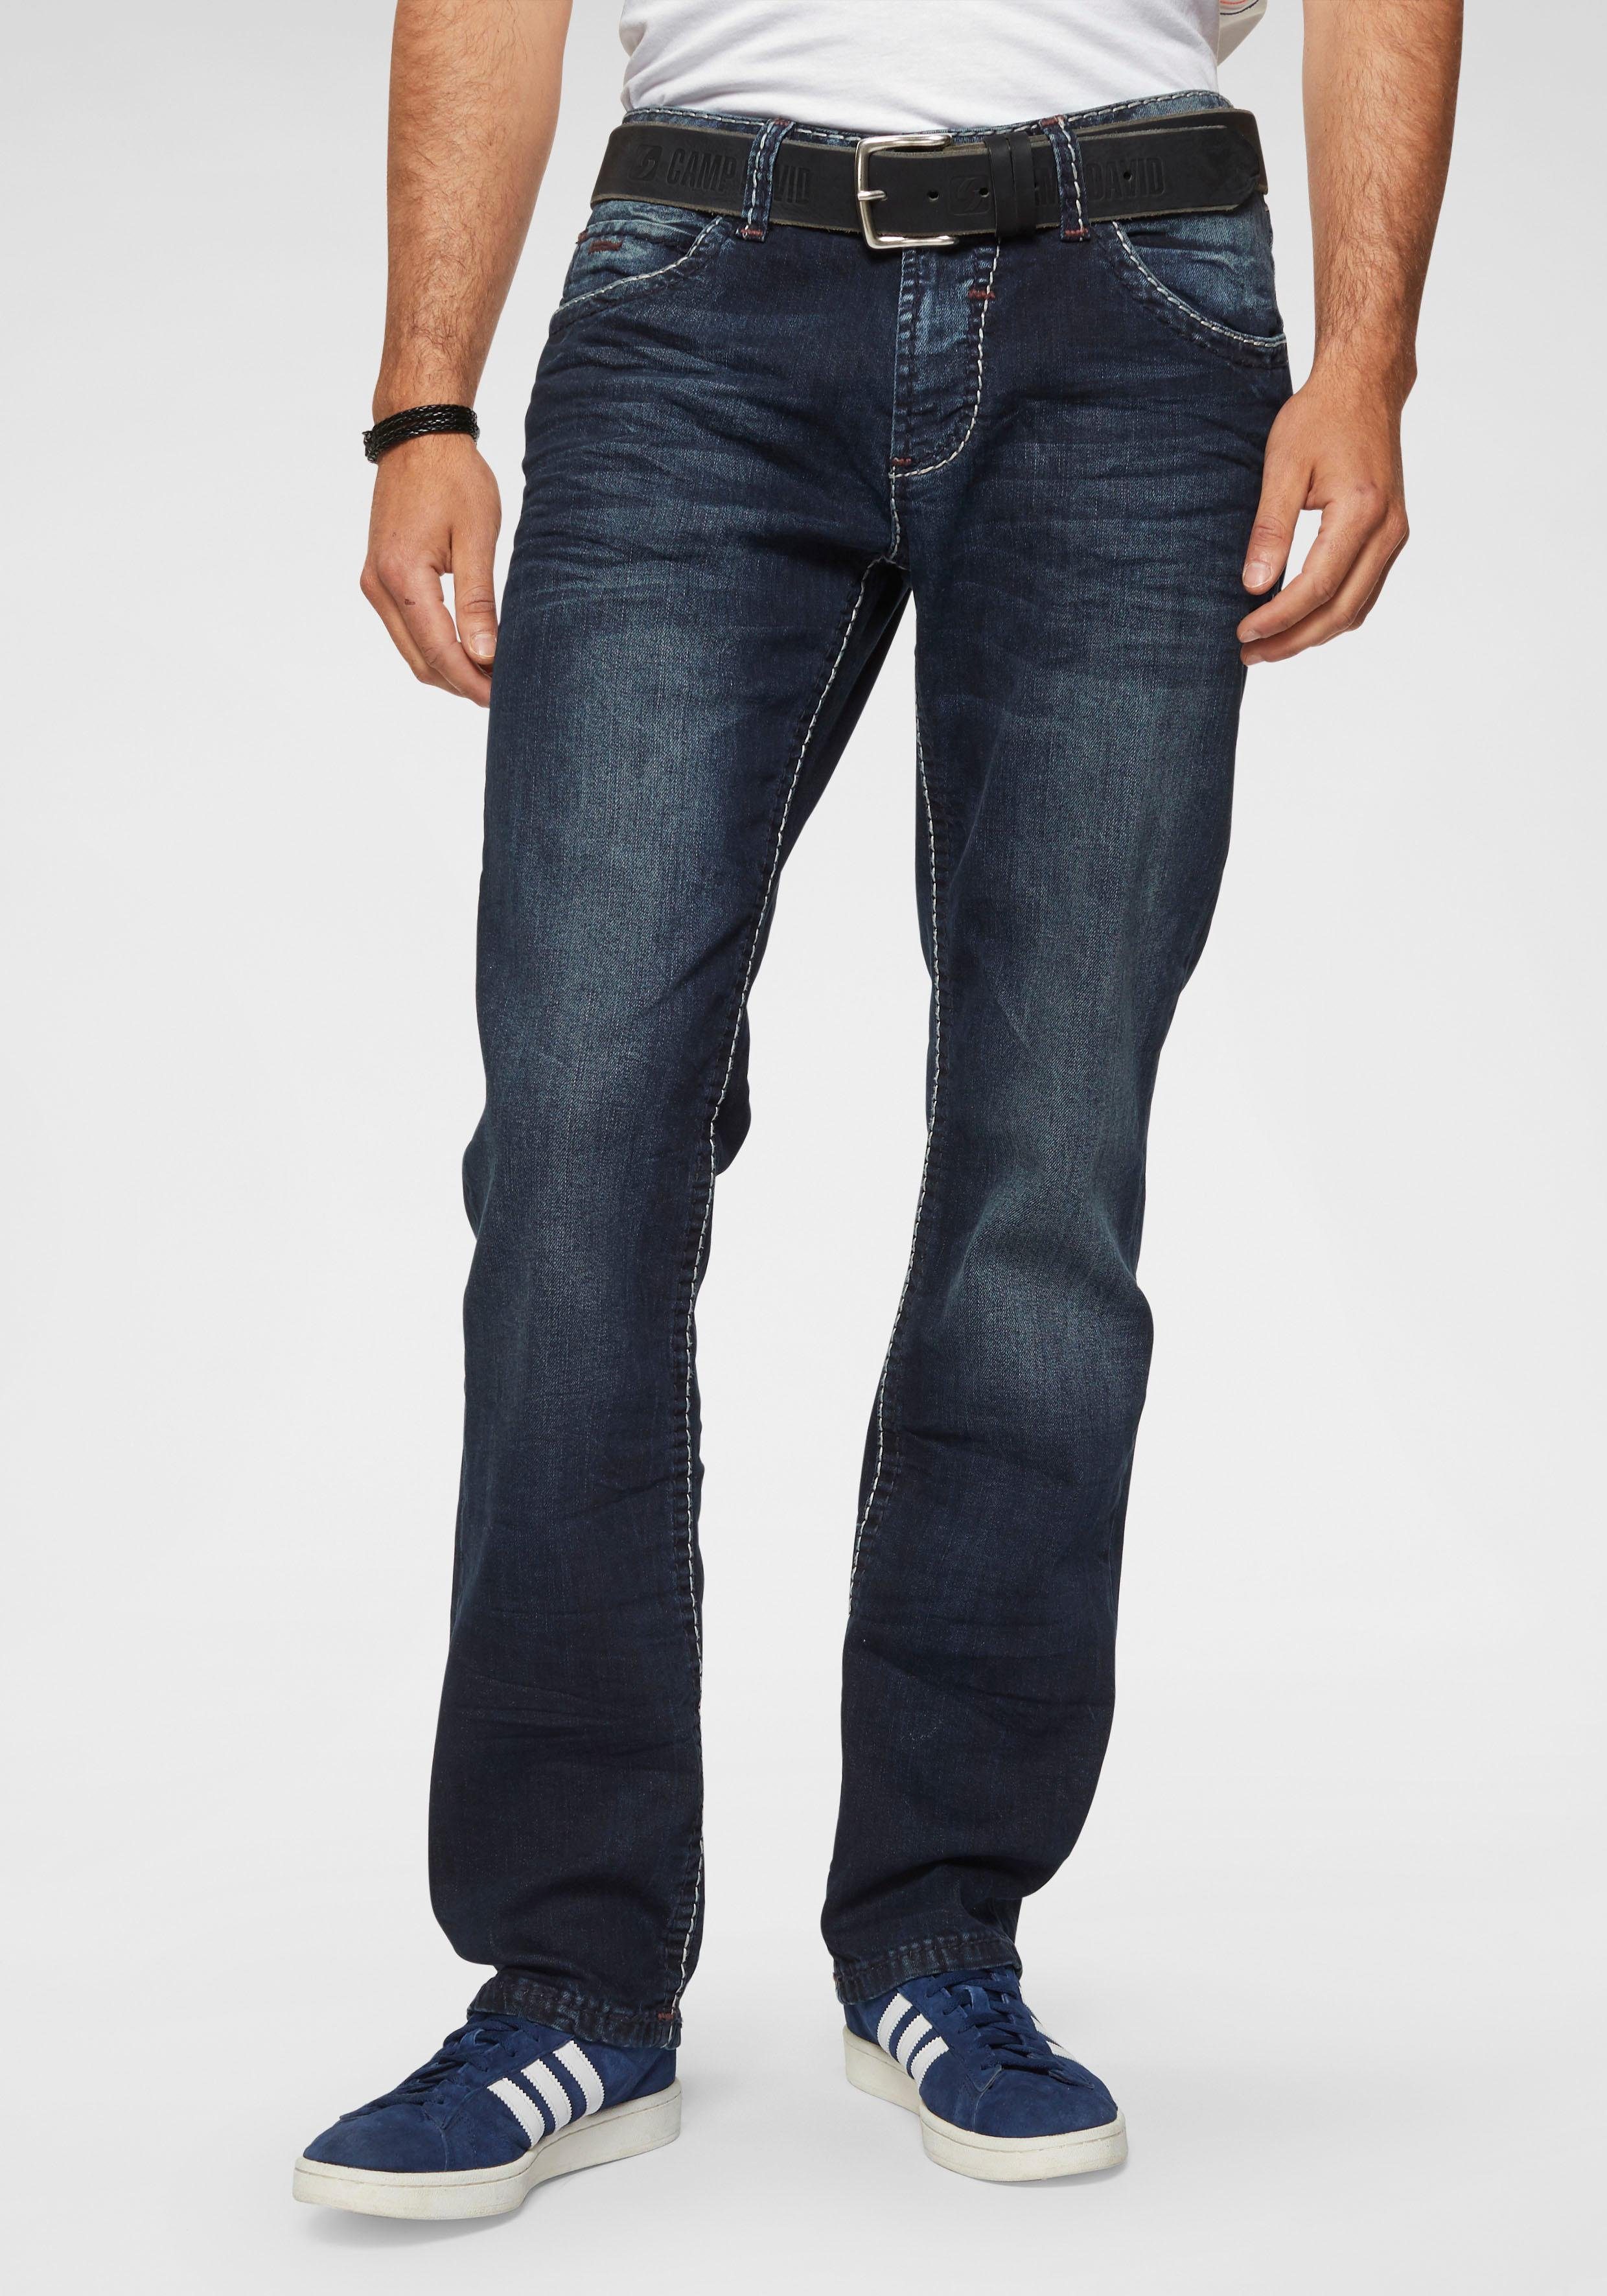 CAMP DAVID Straight-Jeans NI:CO:R611 mit dark-used markanten Steppnähten